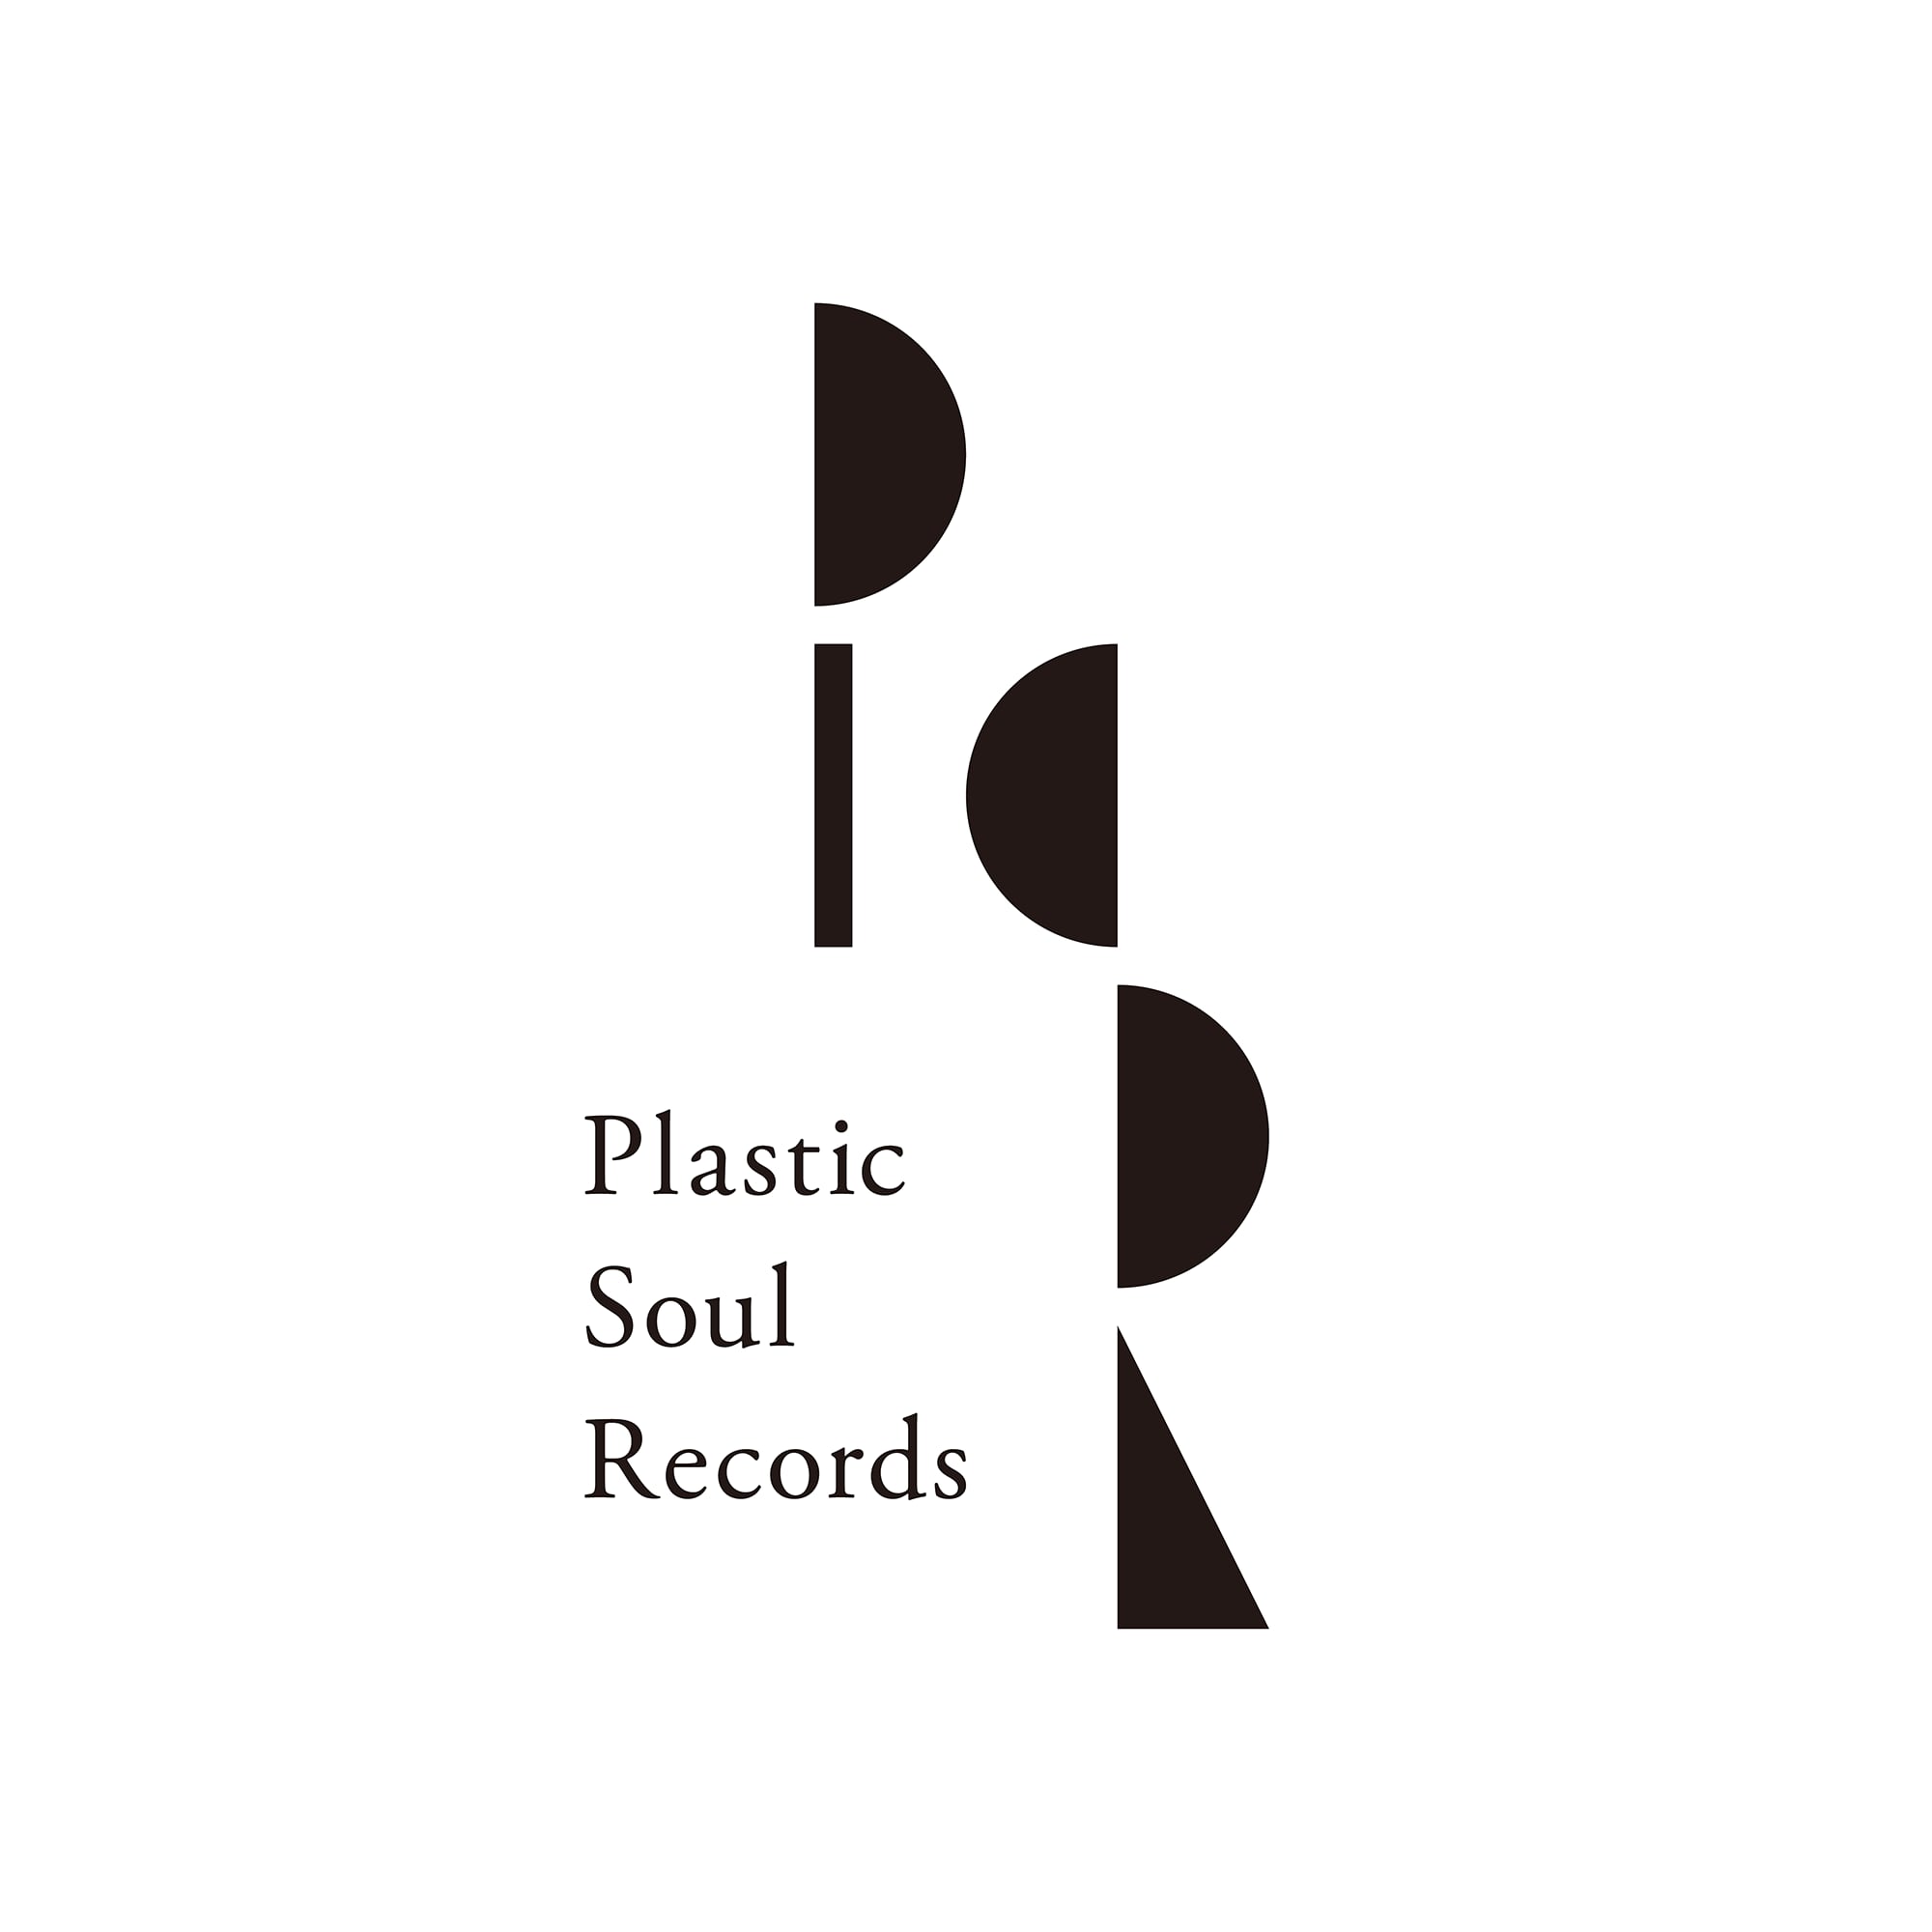 Plastic Soul Records